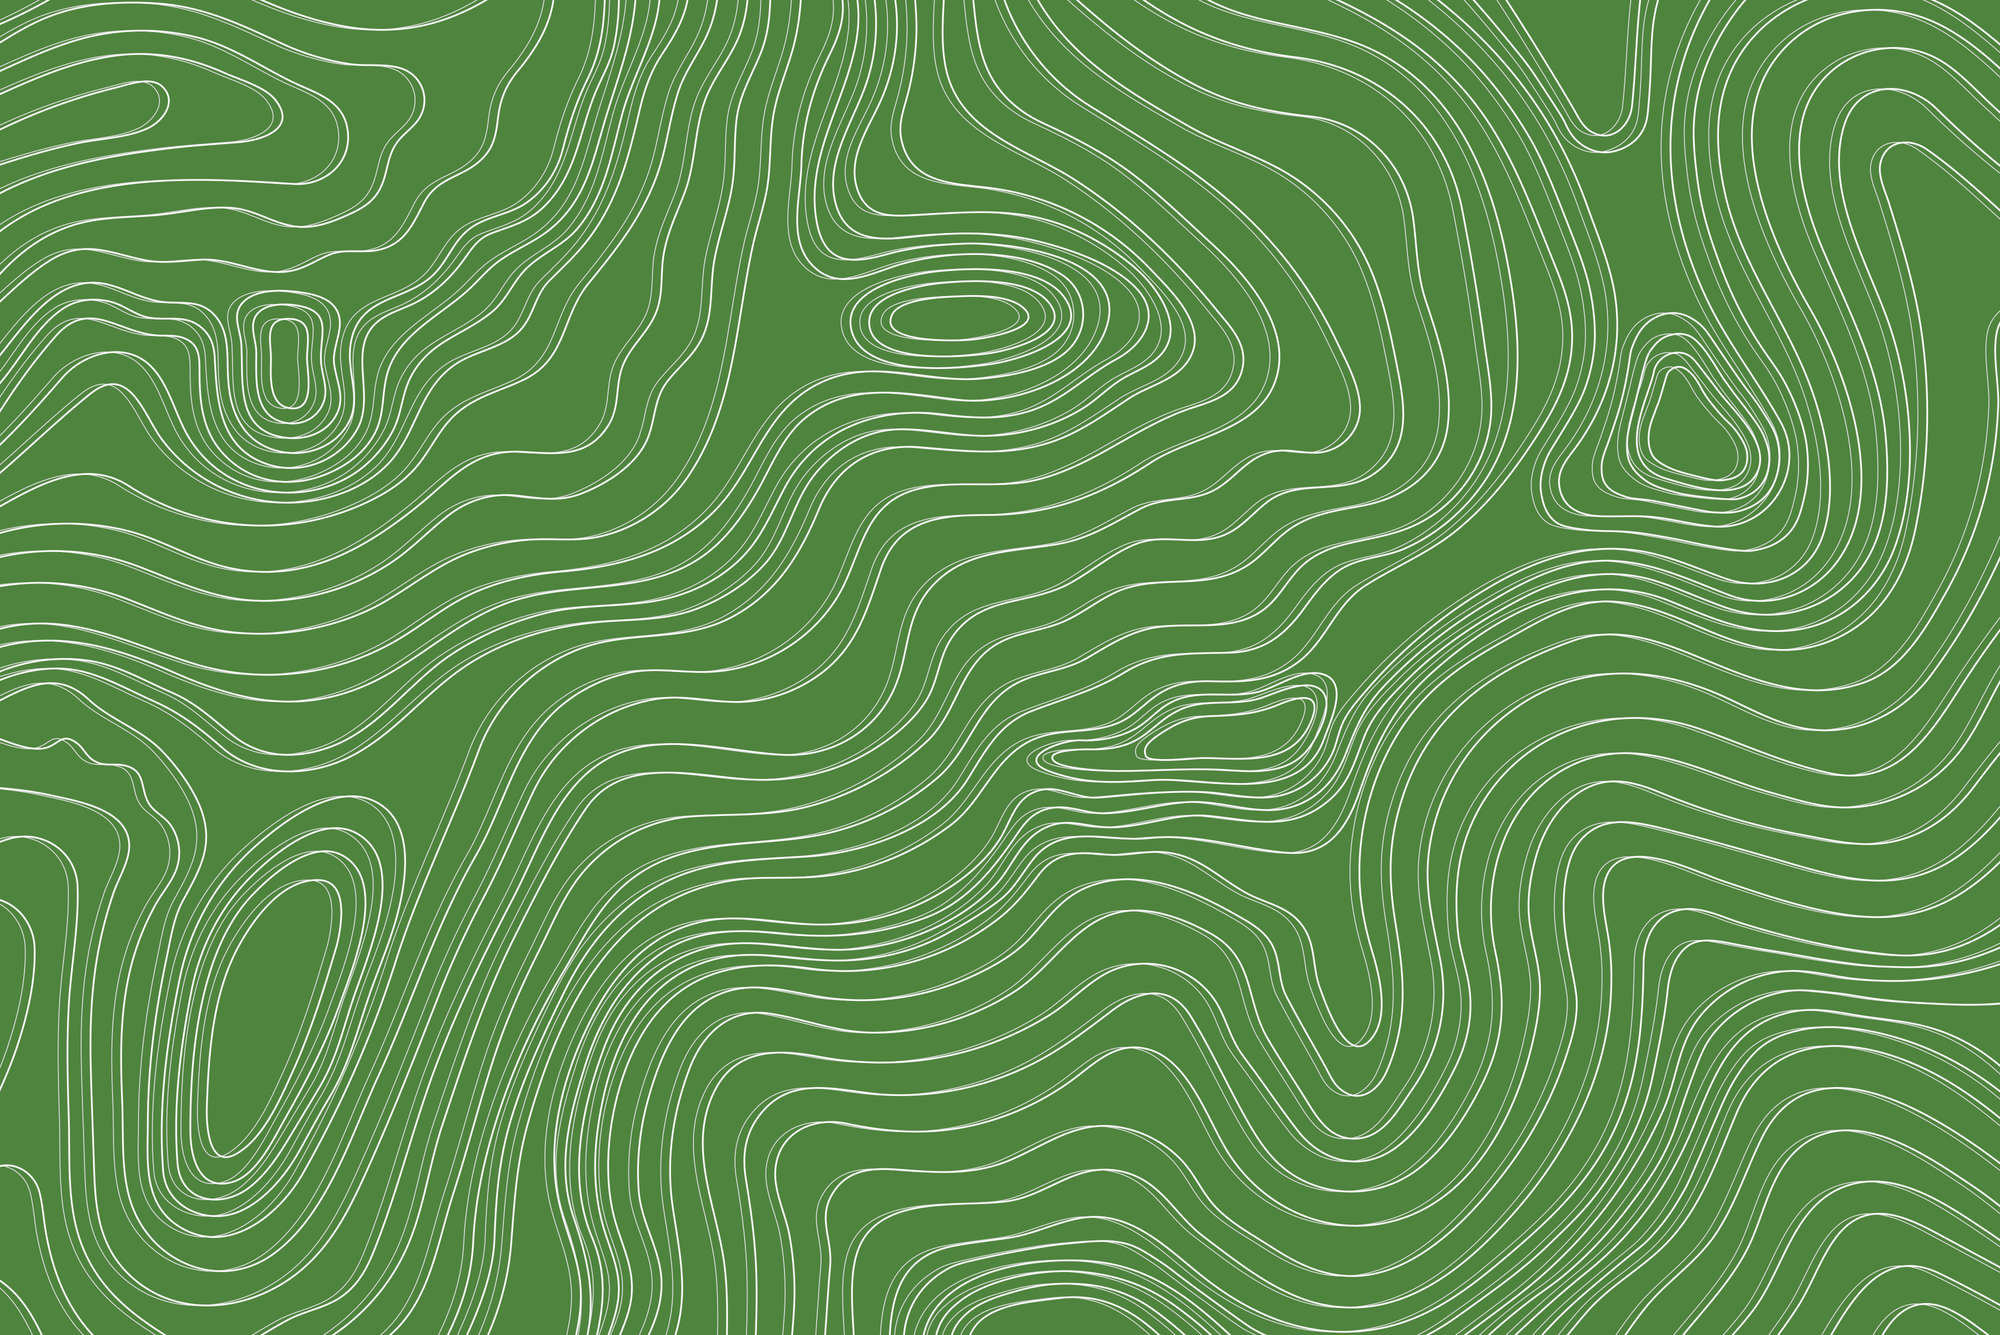             Designbehang golven en cirkels patroon groen op mat glad vlies
        